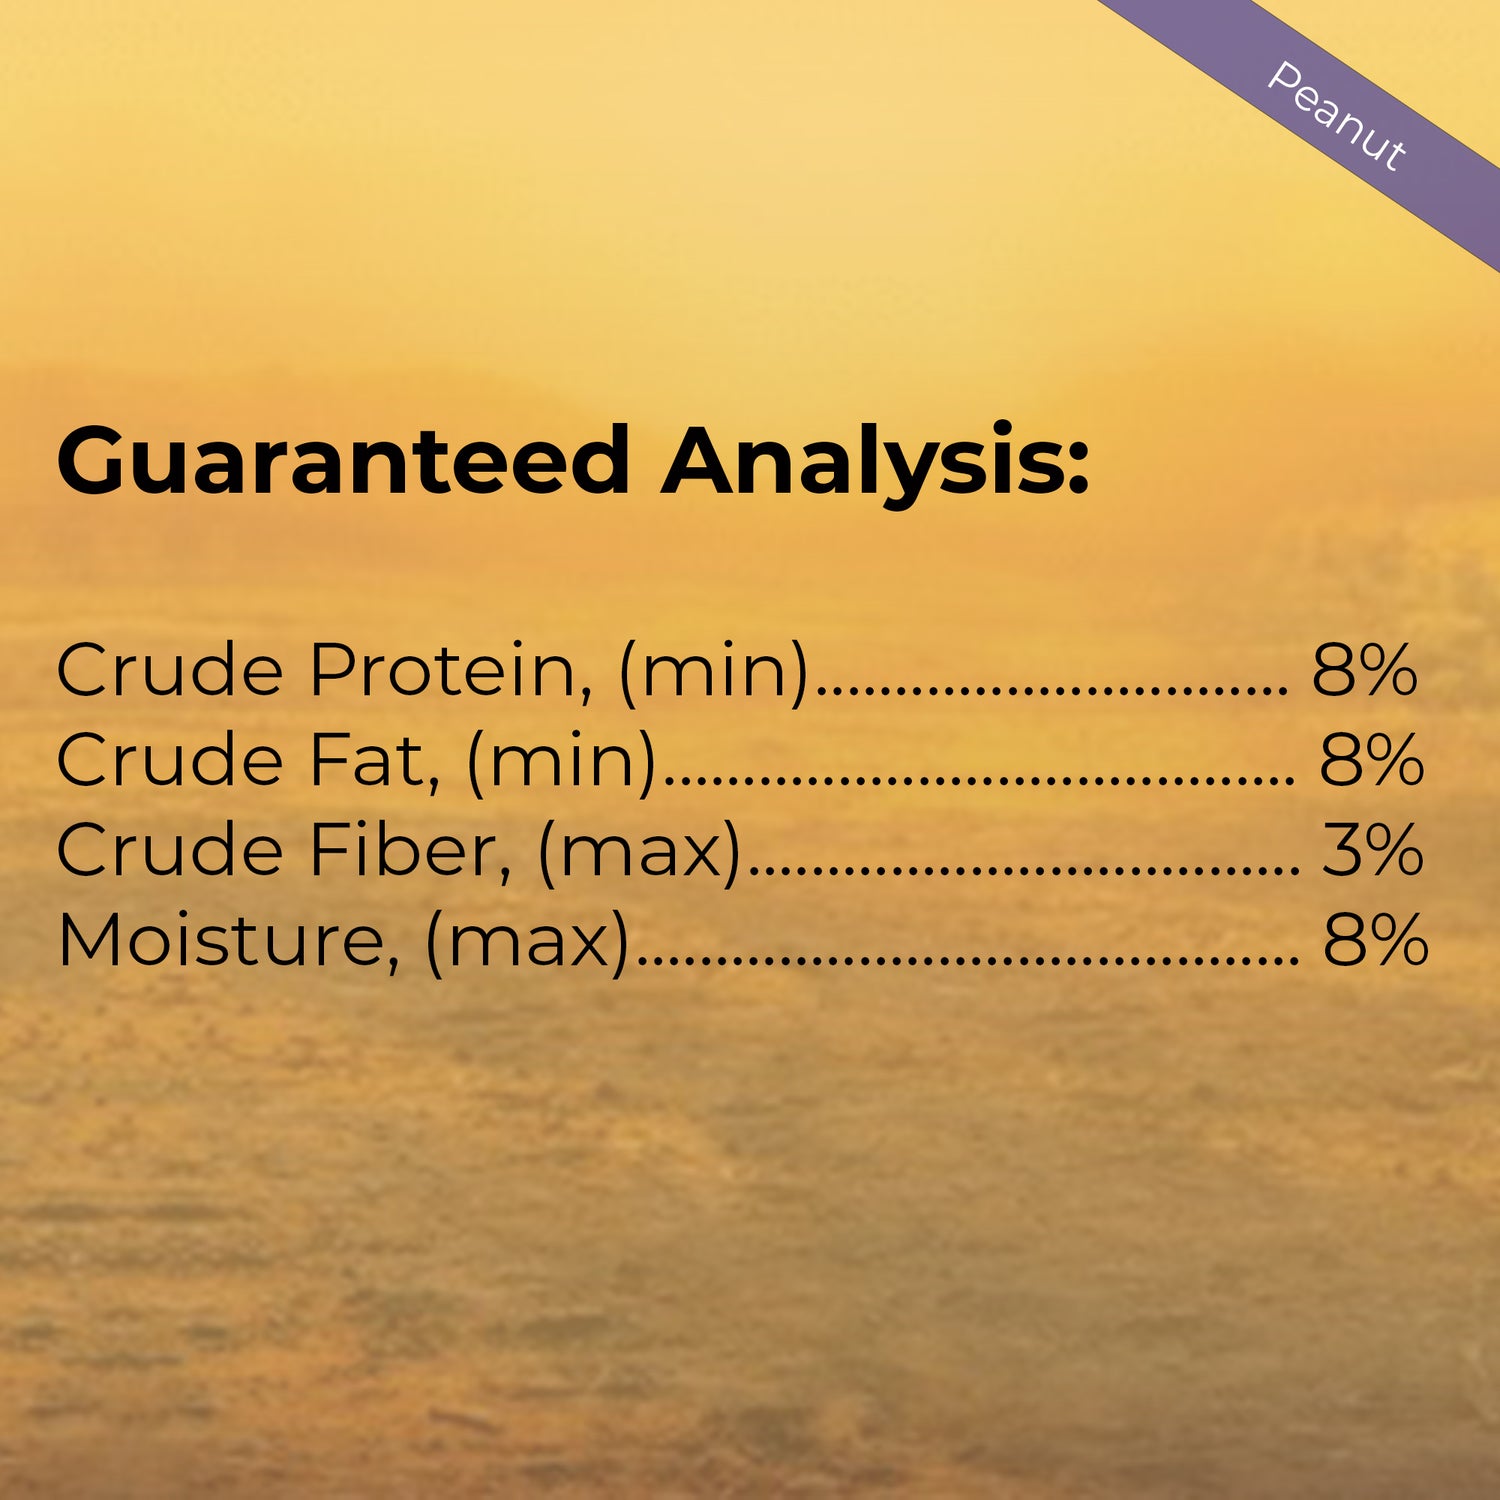 Guaranteed analysis graphic: crude protein (min.) 8%, crude fat (min.) 8%, crude fiber (max.) 3%, moisture (max.) 8%